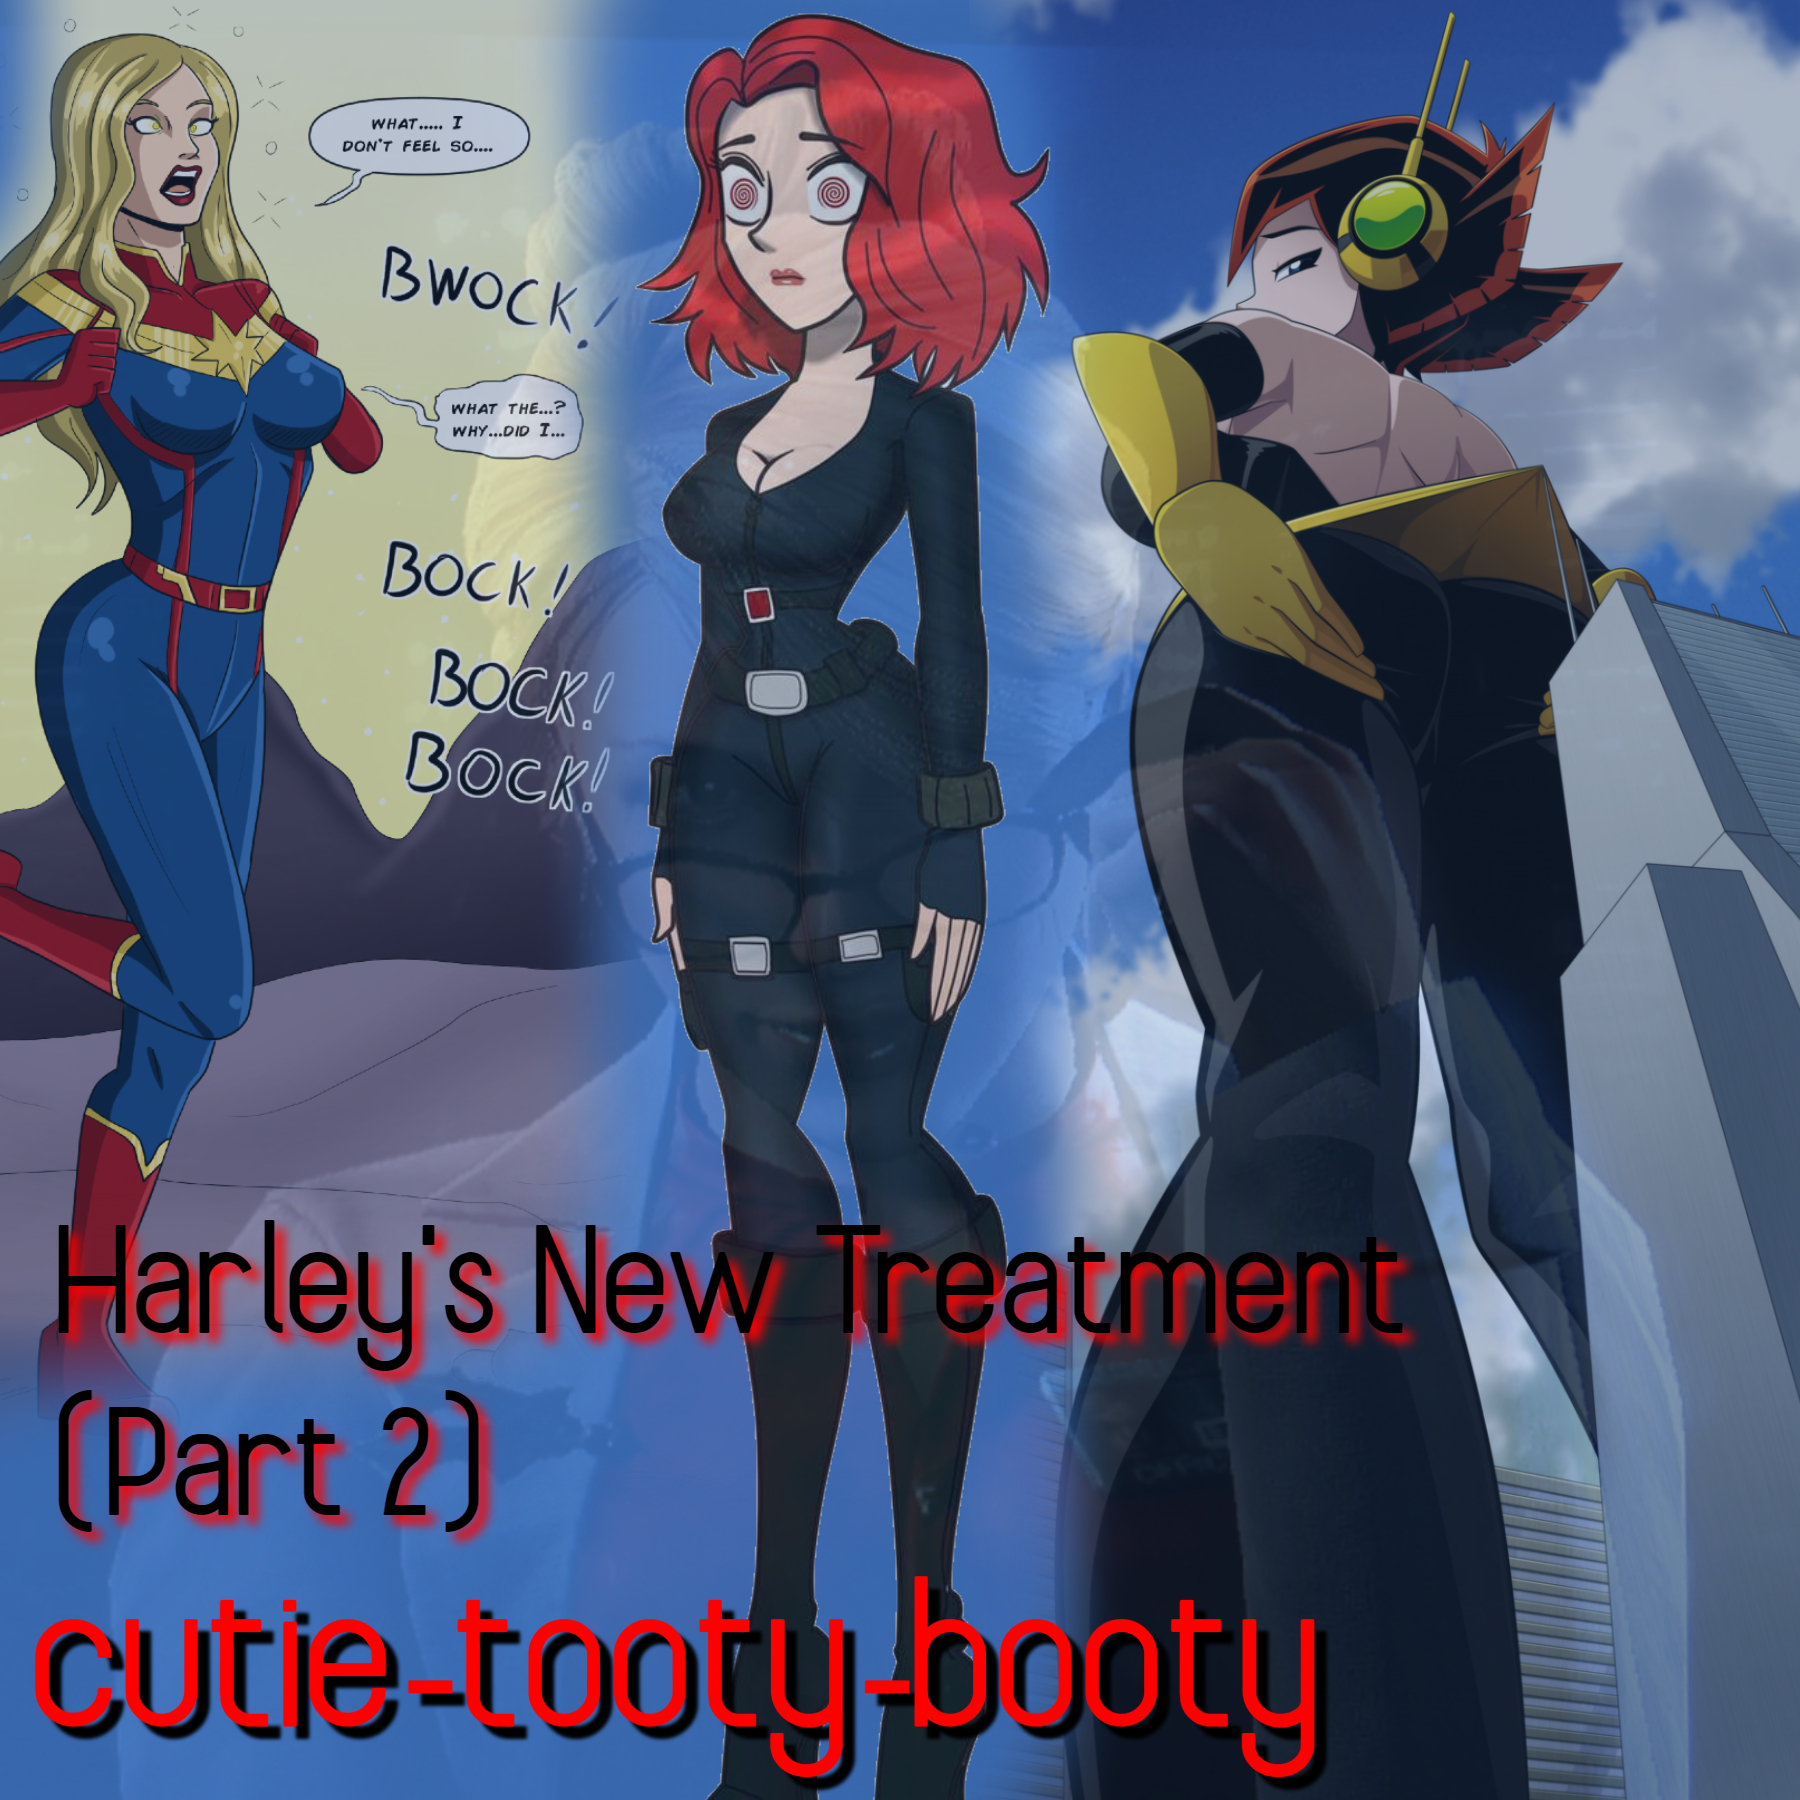 Harley's New Treatment (Part 2)